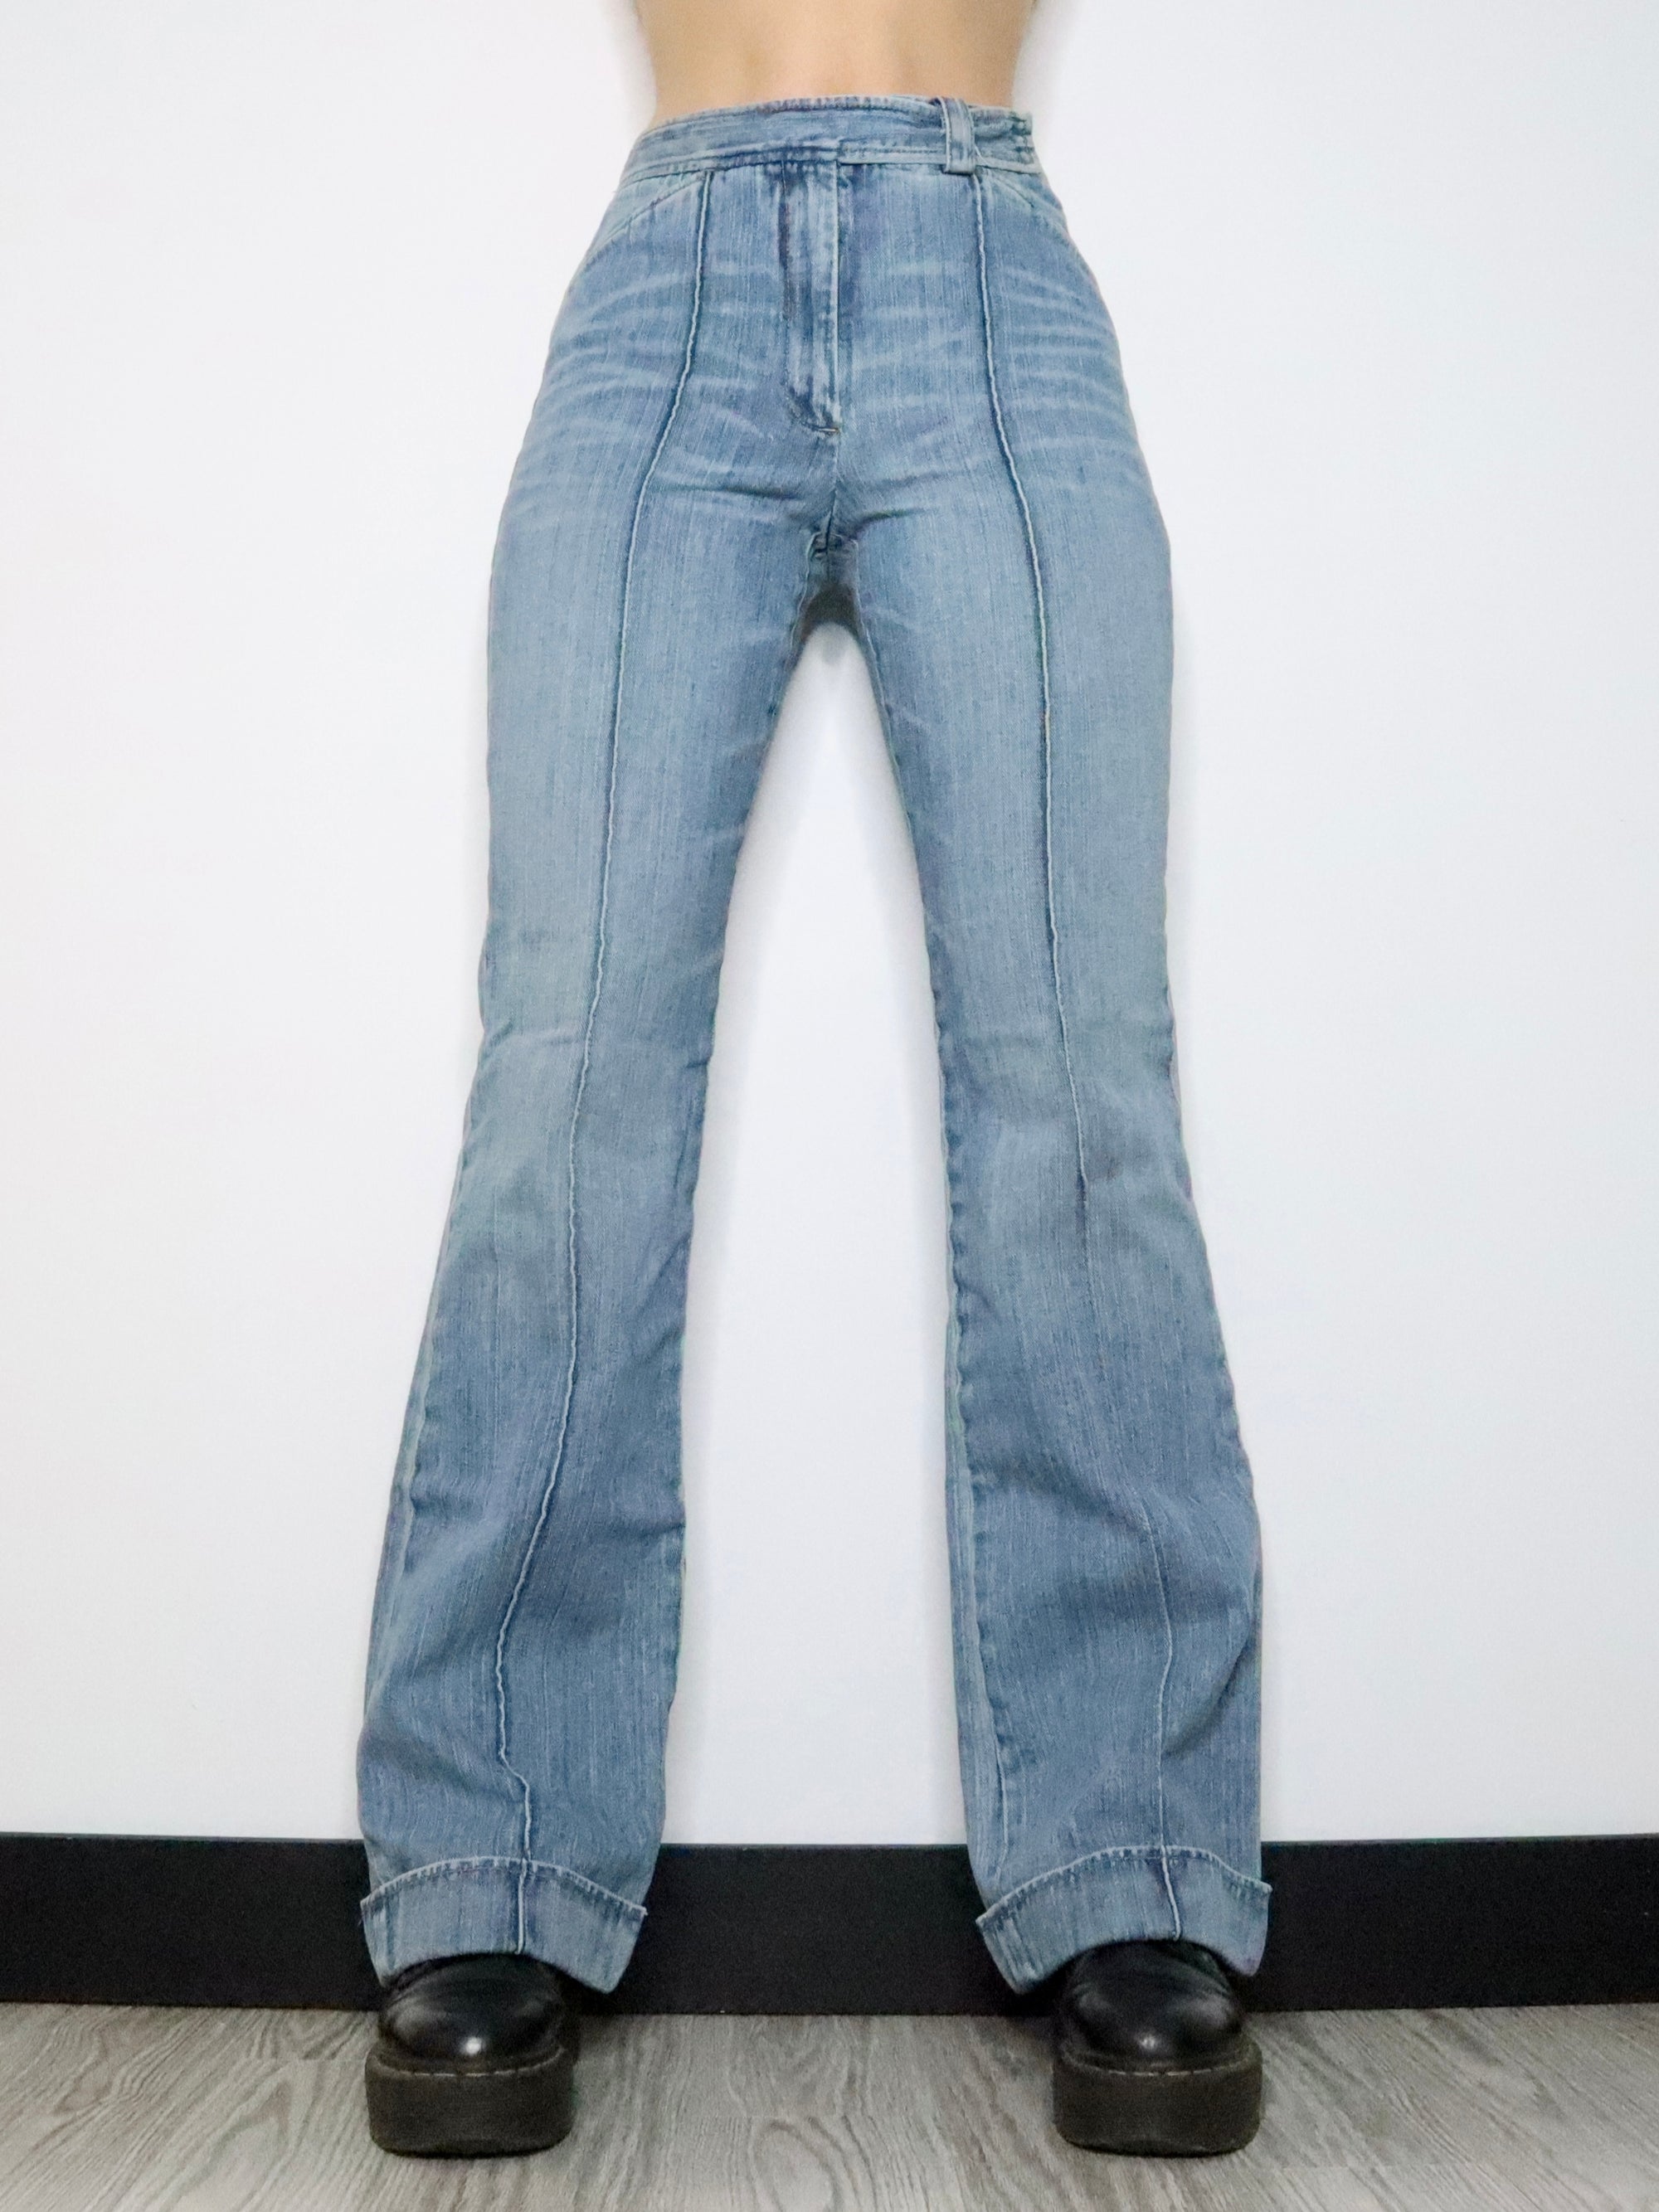 DKNY High Waisted Flare Jeans (Large)